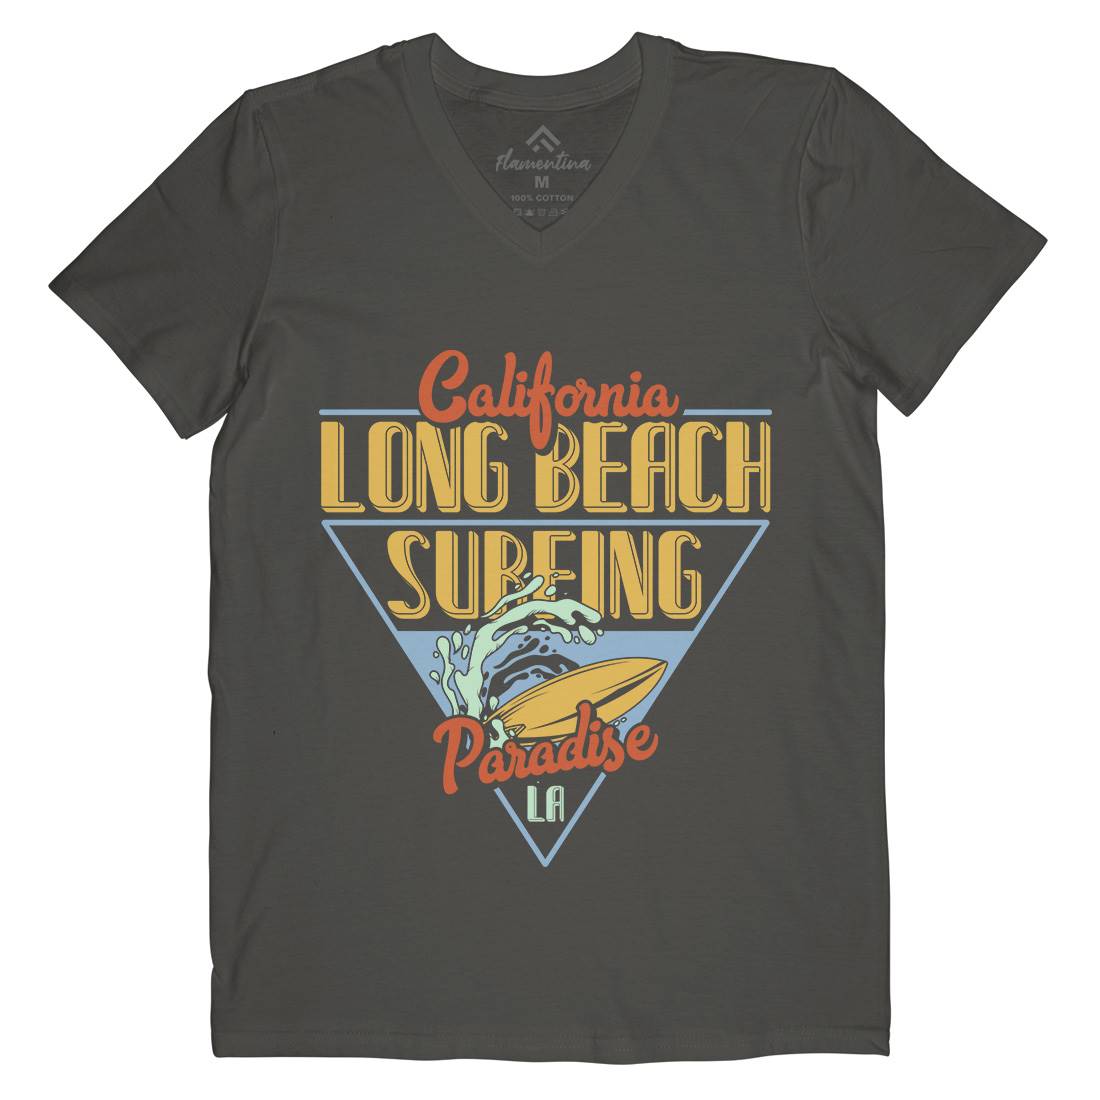 Long Beach Surfing Mens V-Neck T-Shirt Surf B359